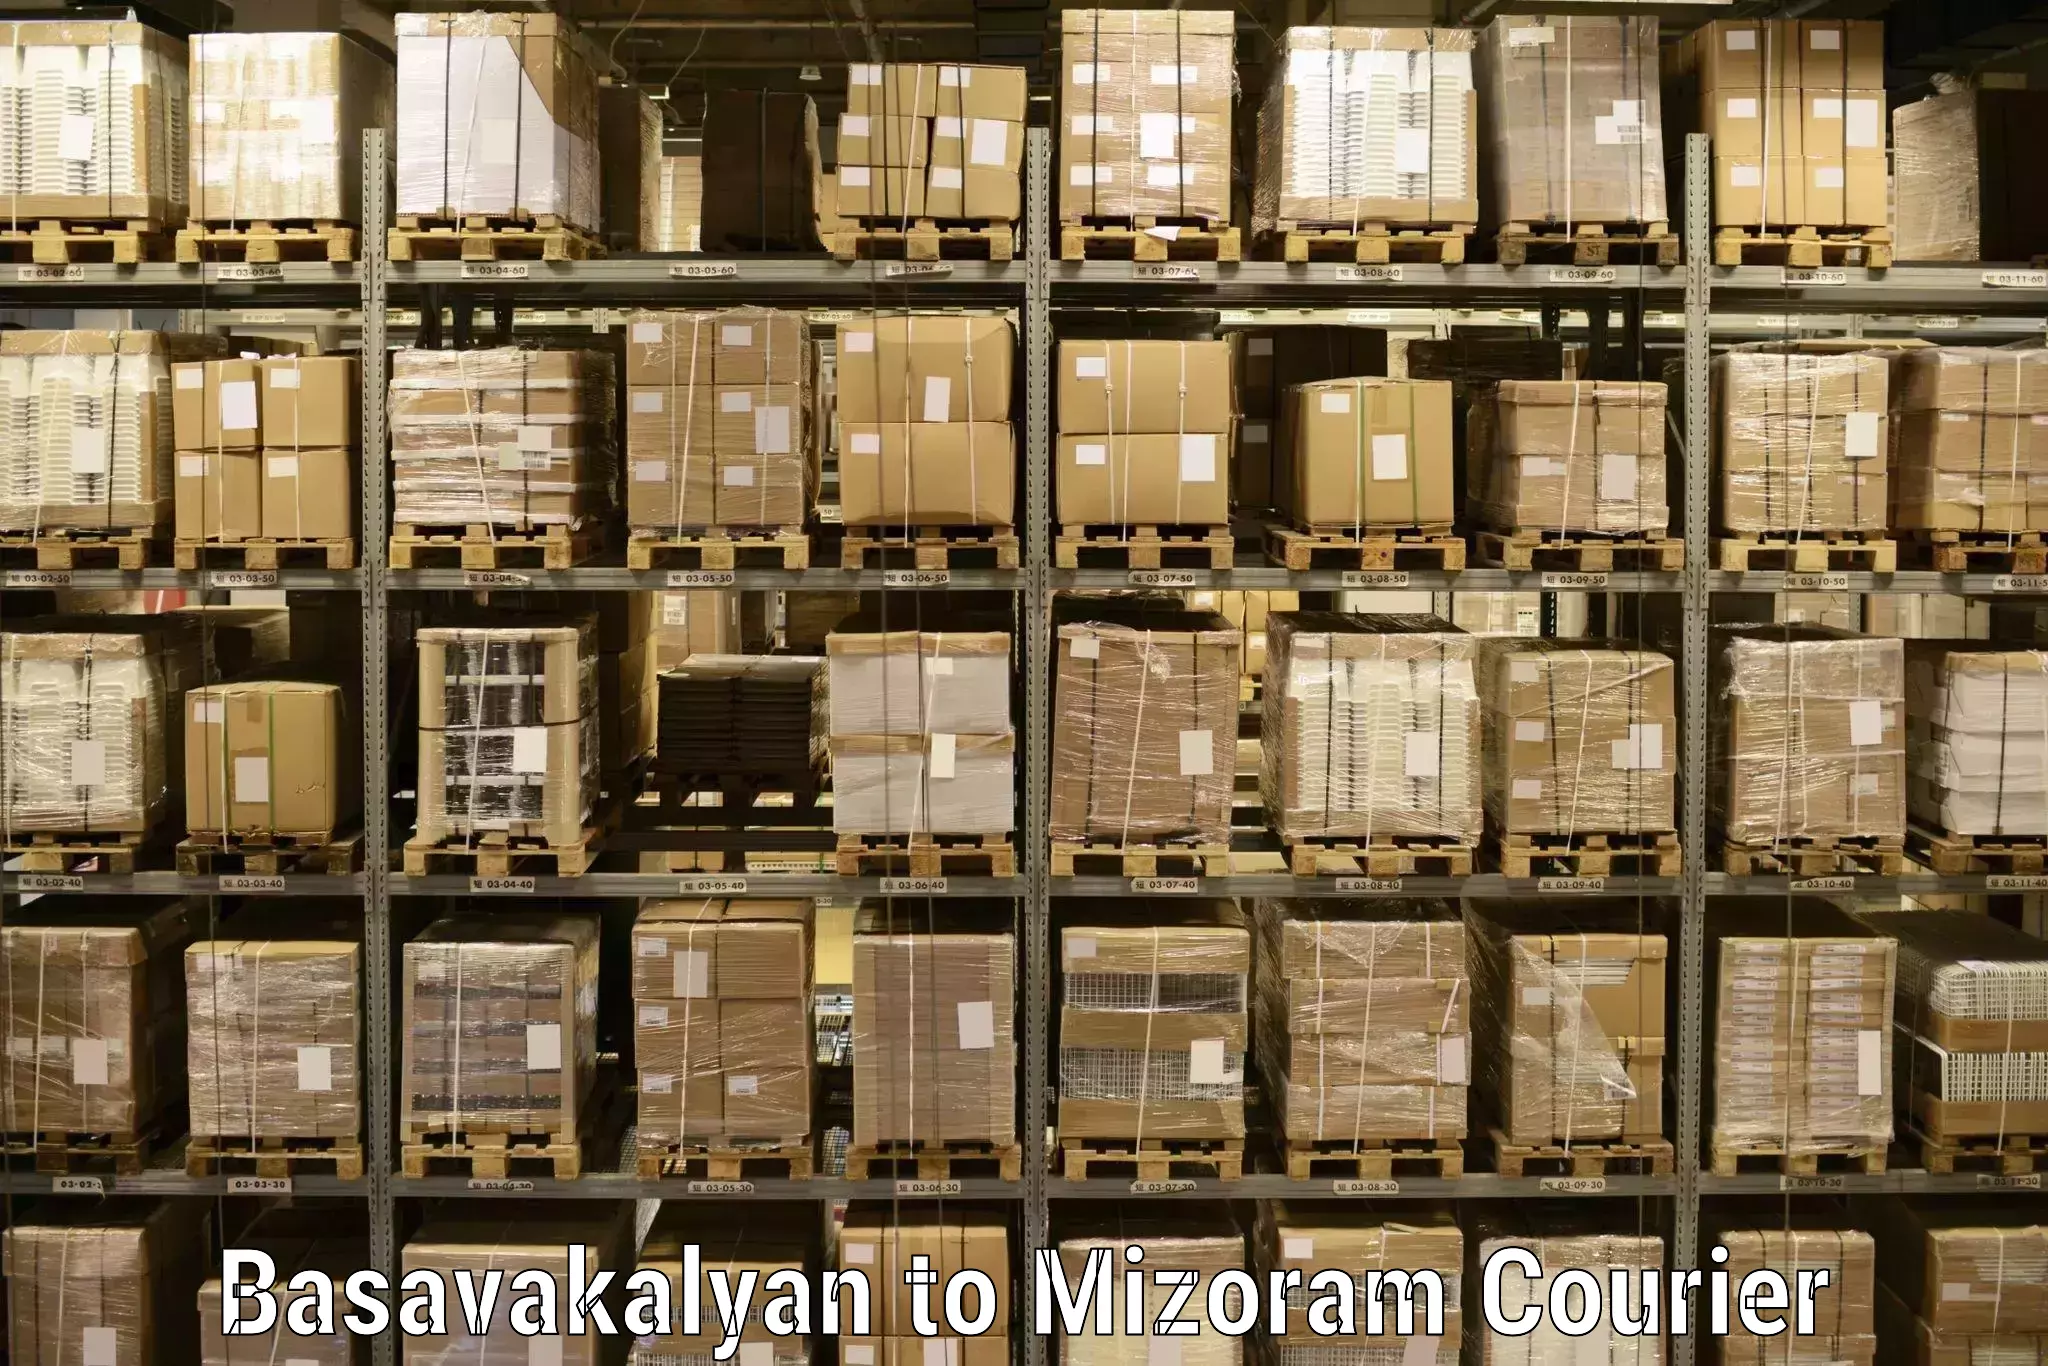 Modern courier technology Basavakalyan to Aizawl